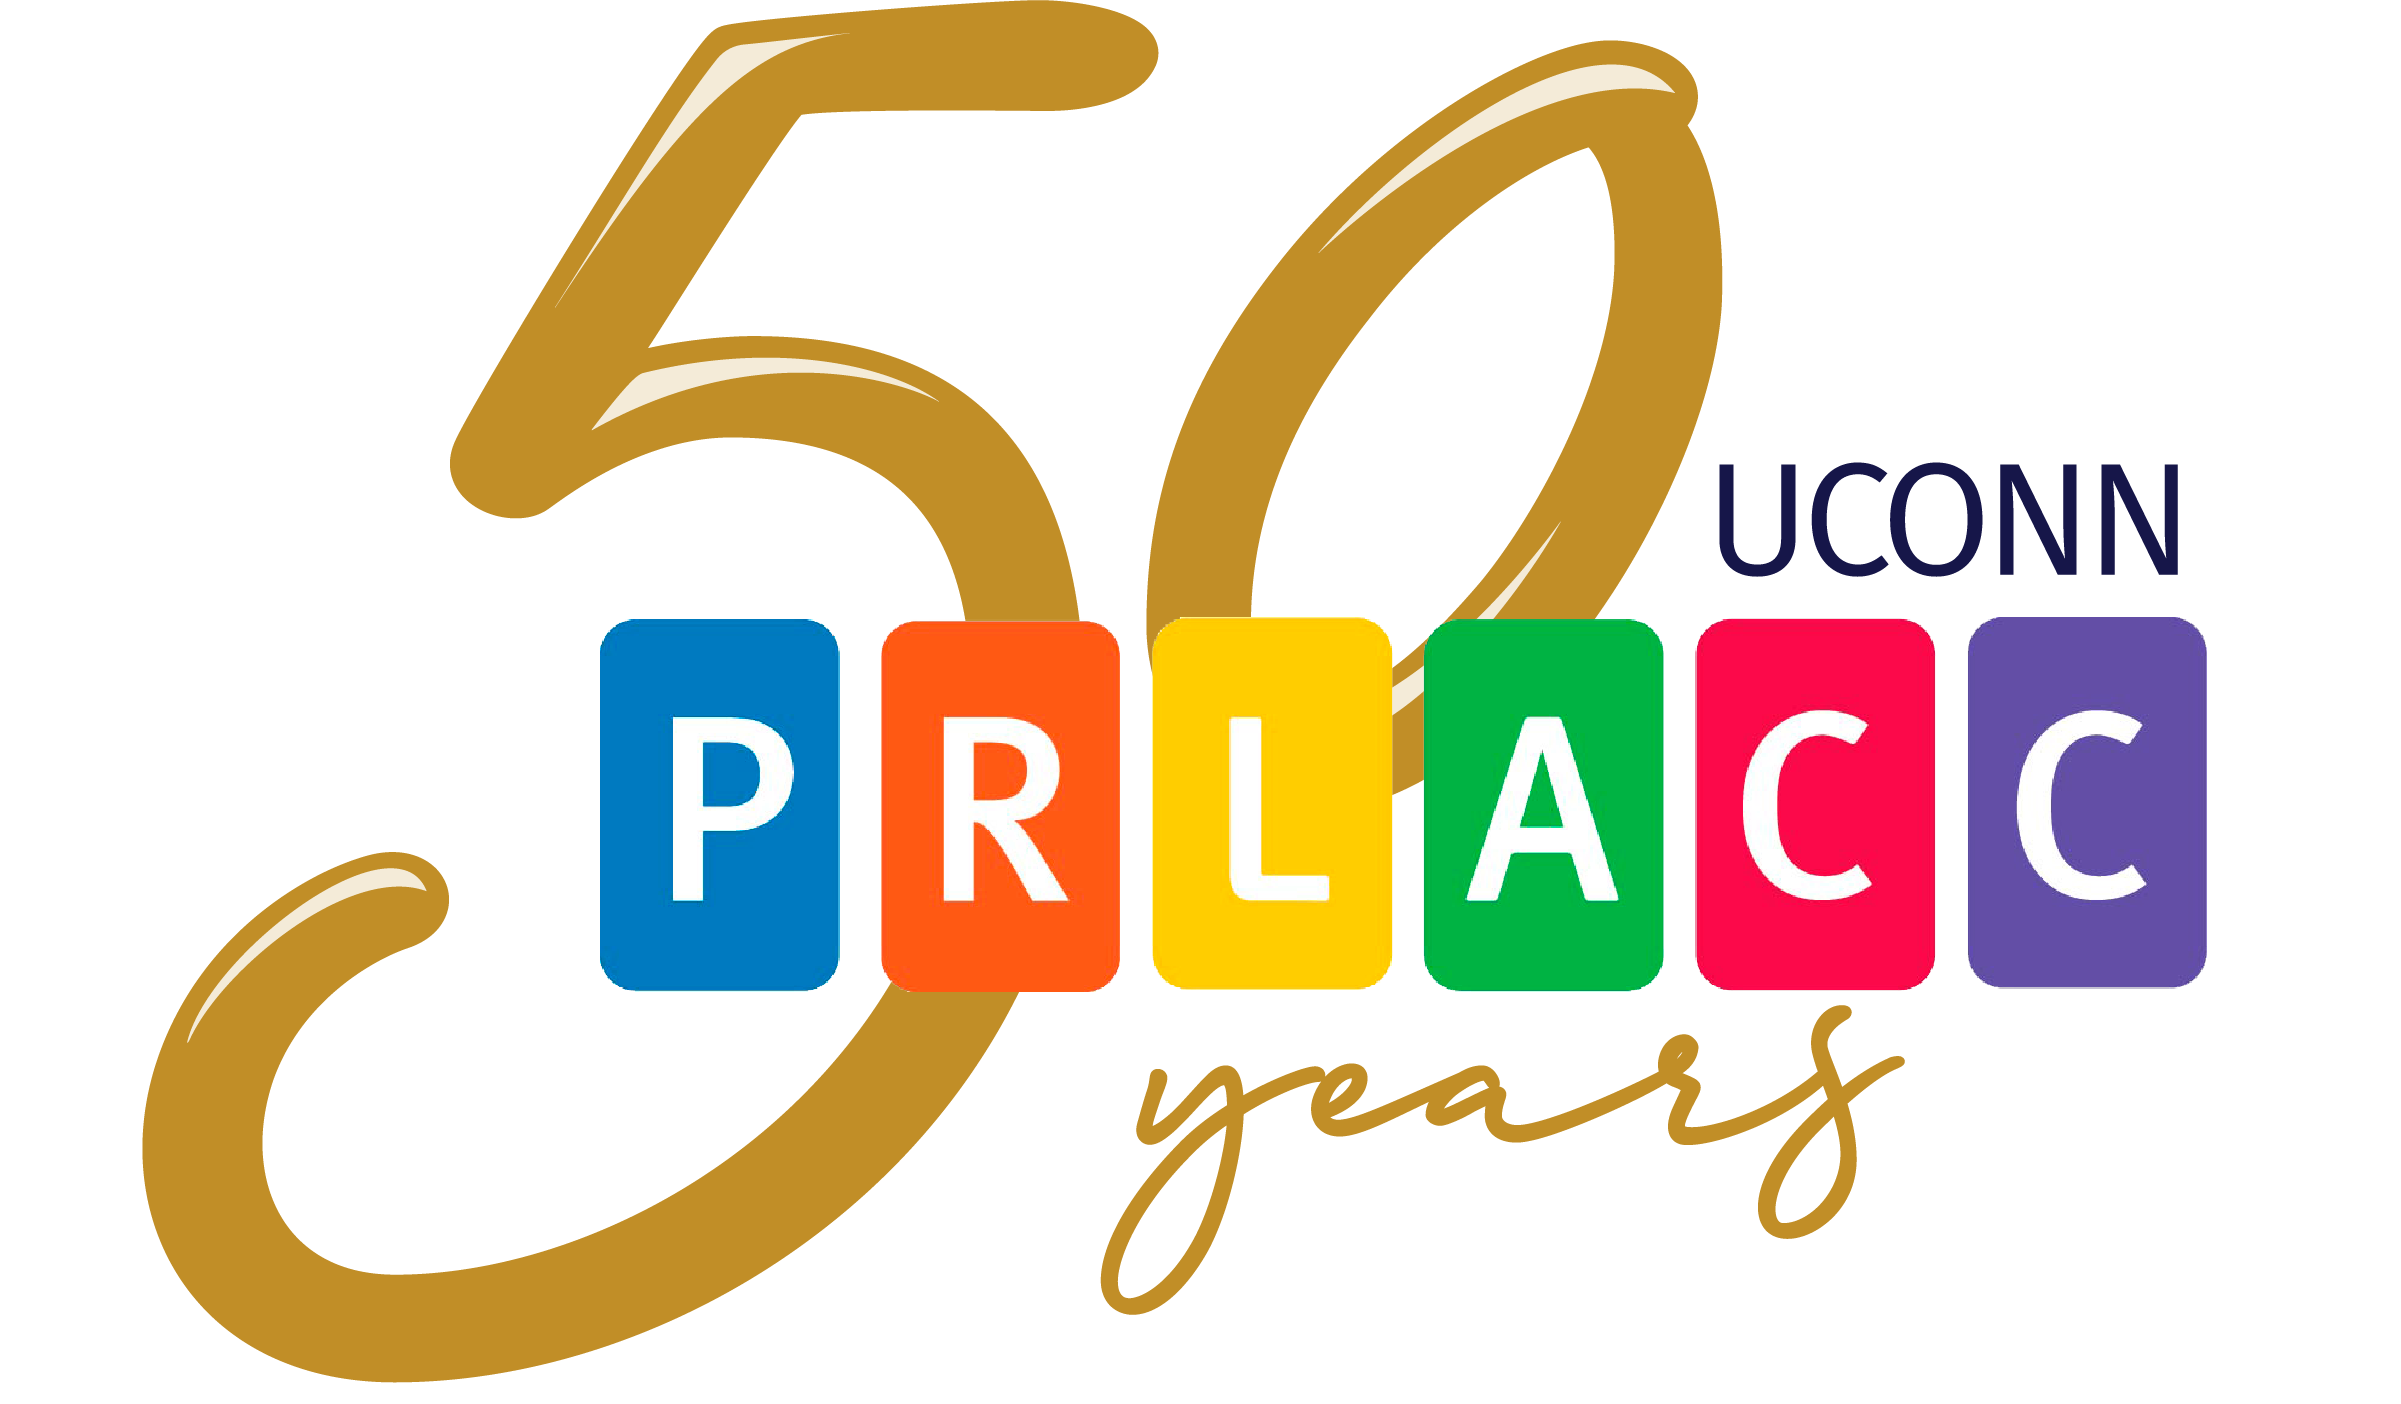 PRLACC 50th logo